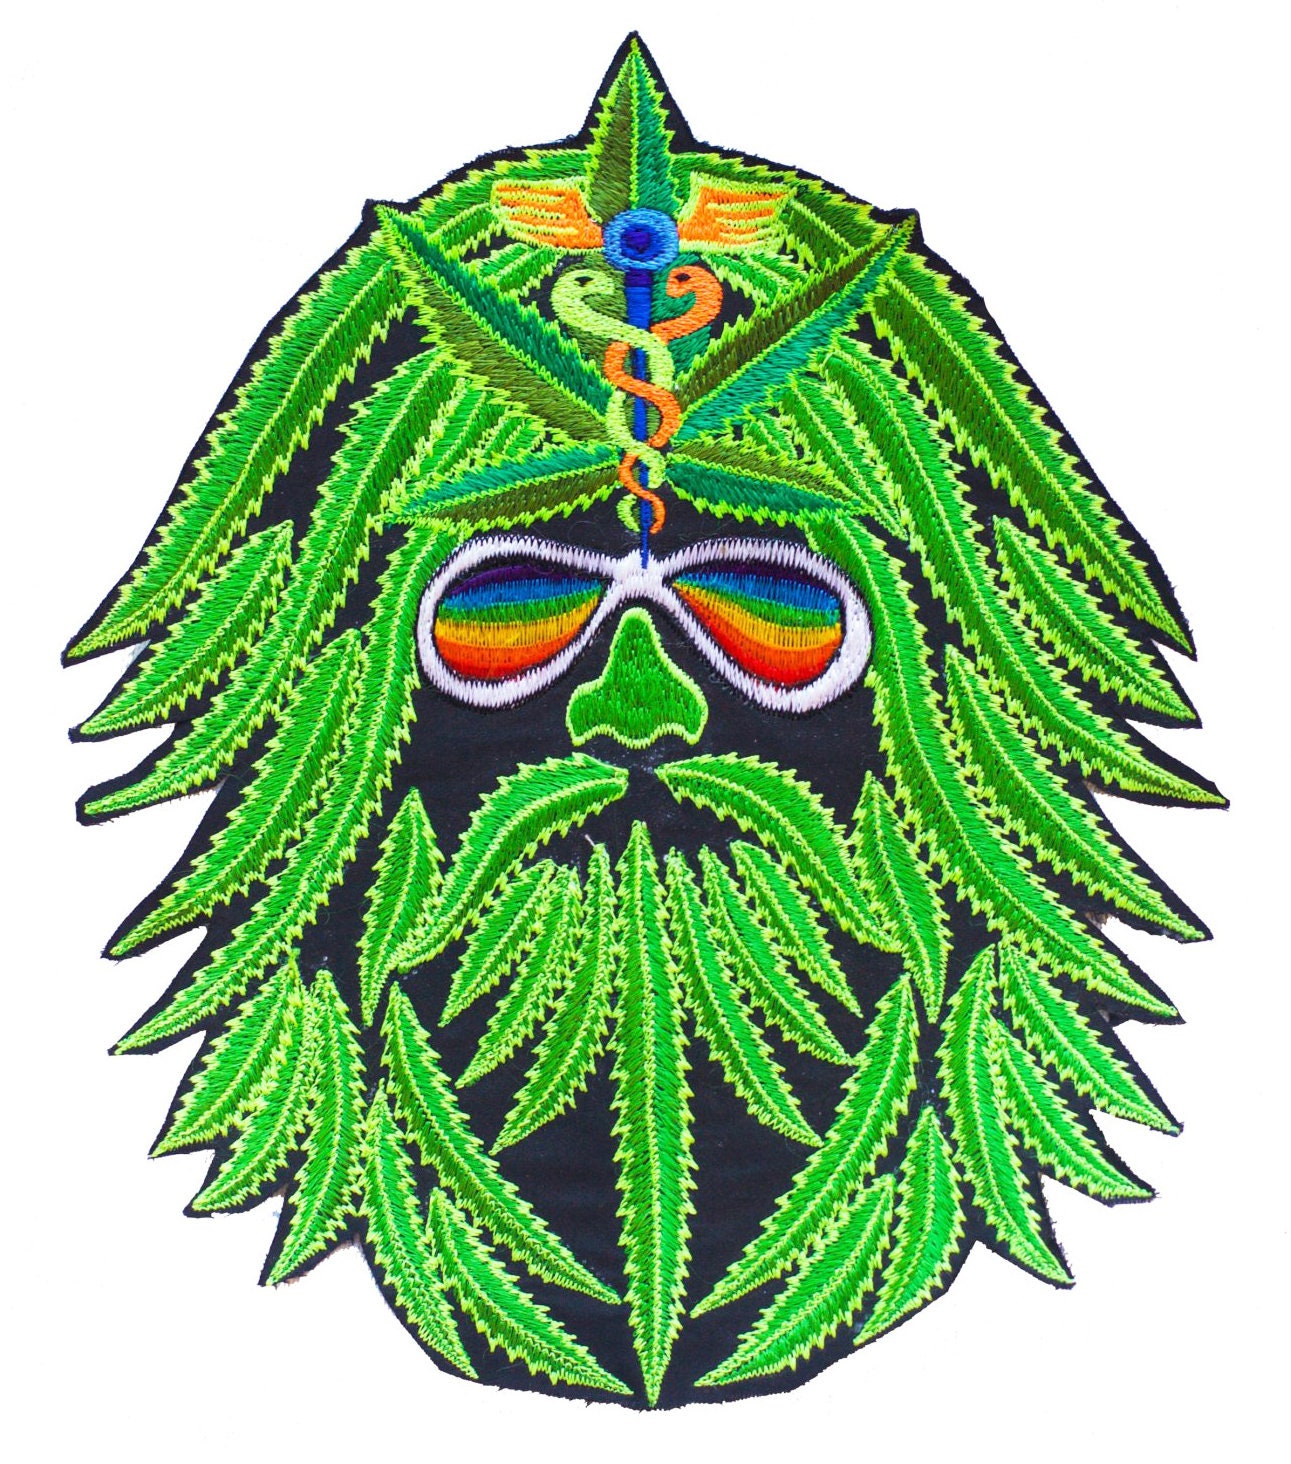 Medical Cannabis T-Shirt hippie weed goa tshirt psychedelic goa trance THC spirit marihuana healing hemp embroidery shirt